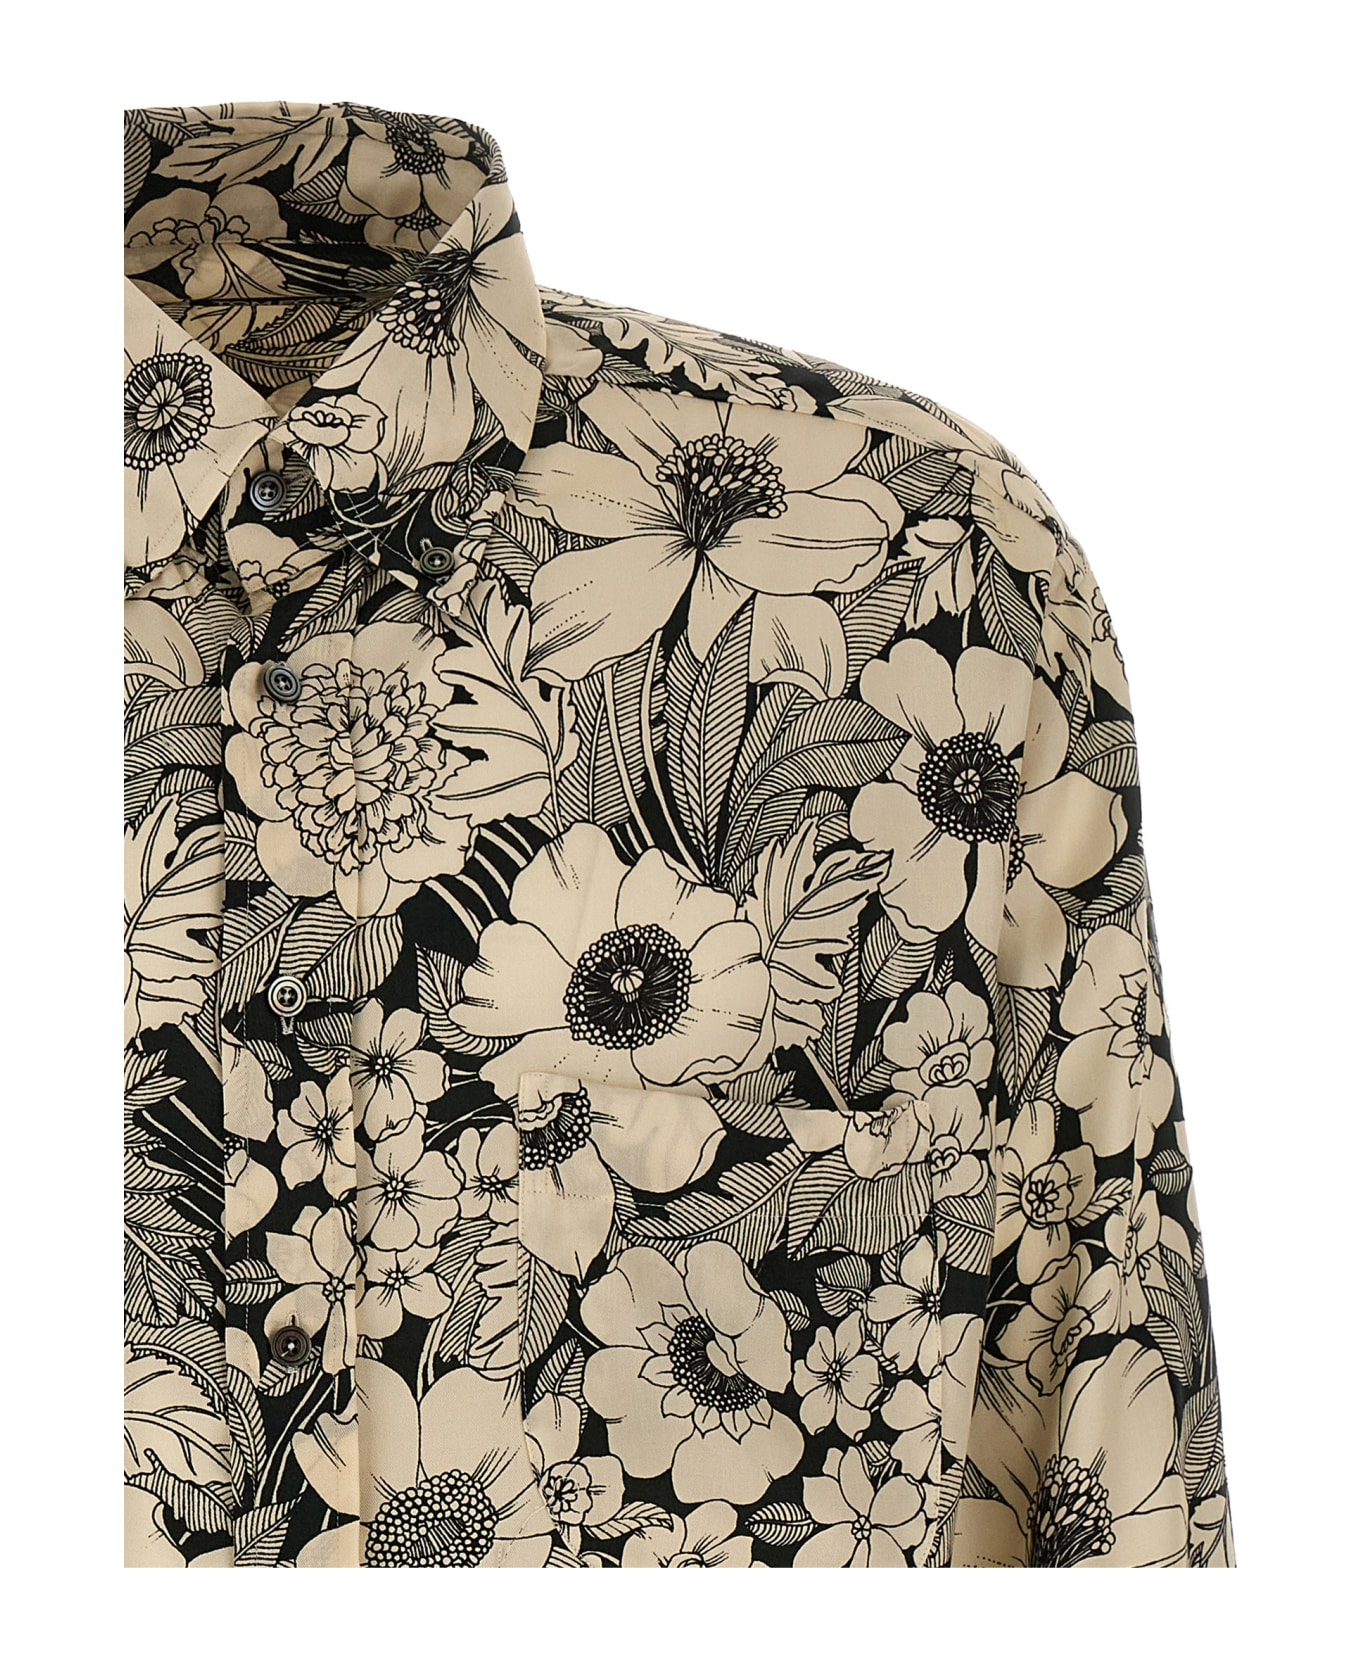 Tom Ford Floral Print Shirt - WHITE/BLACK